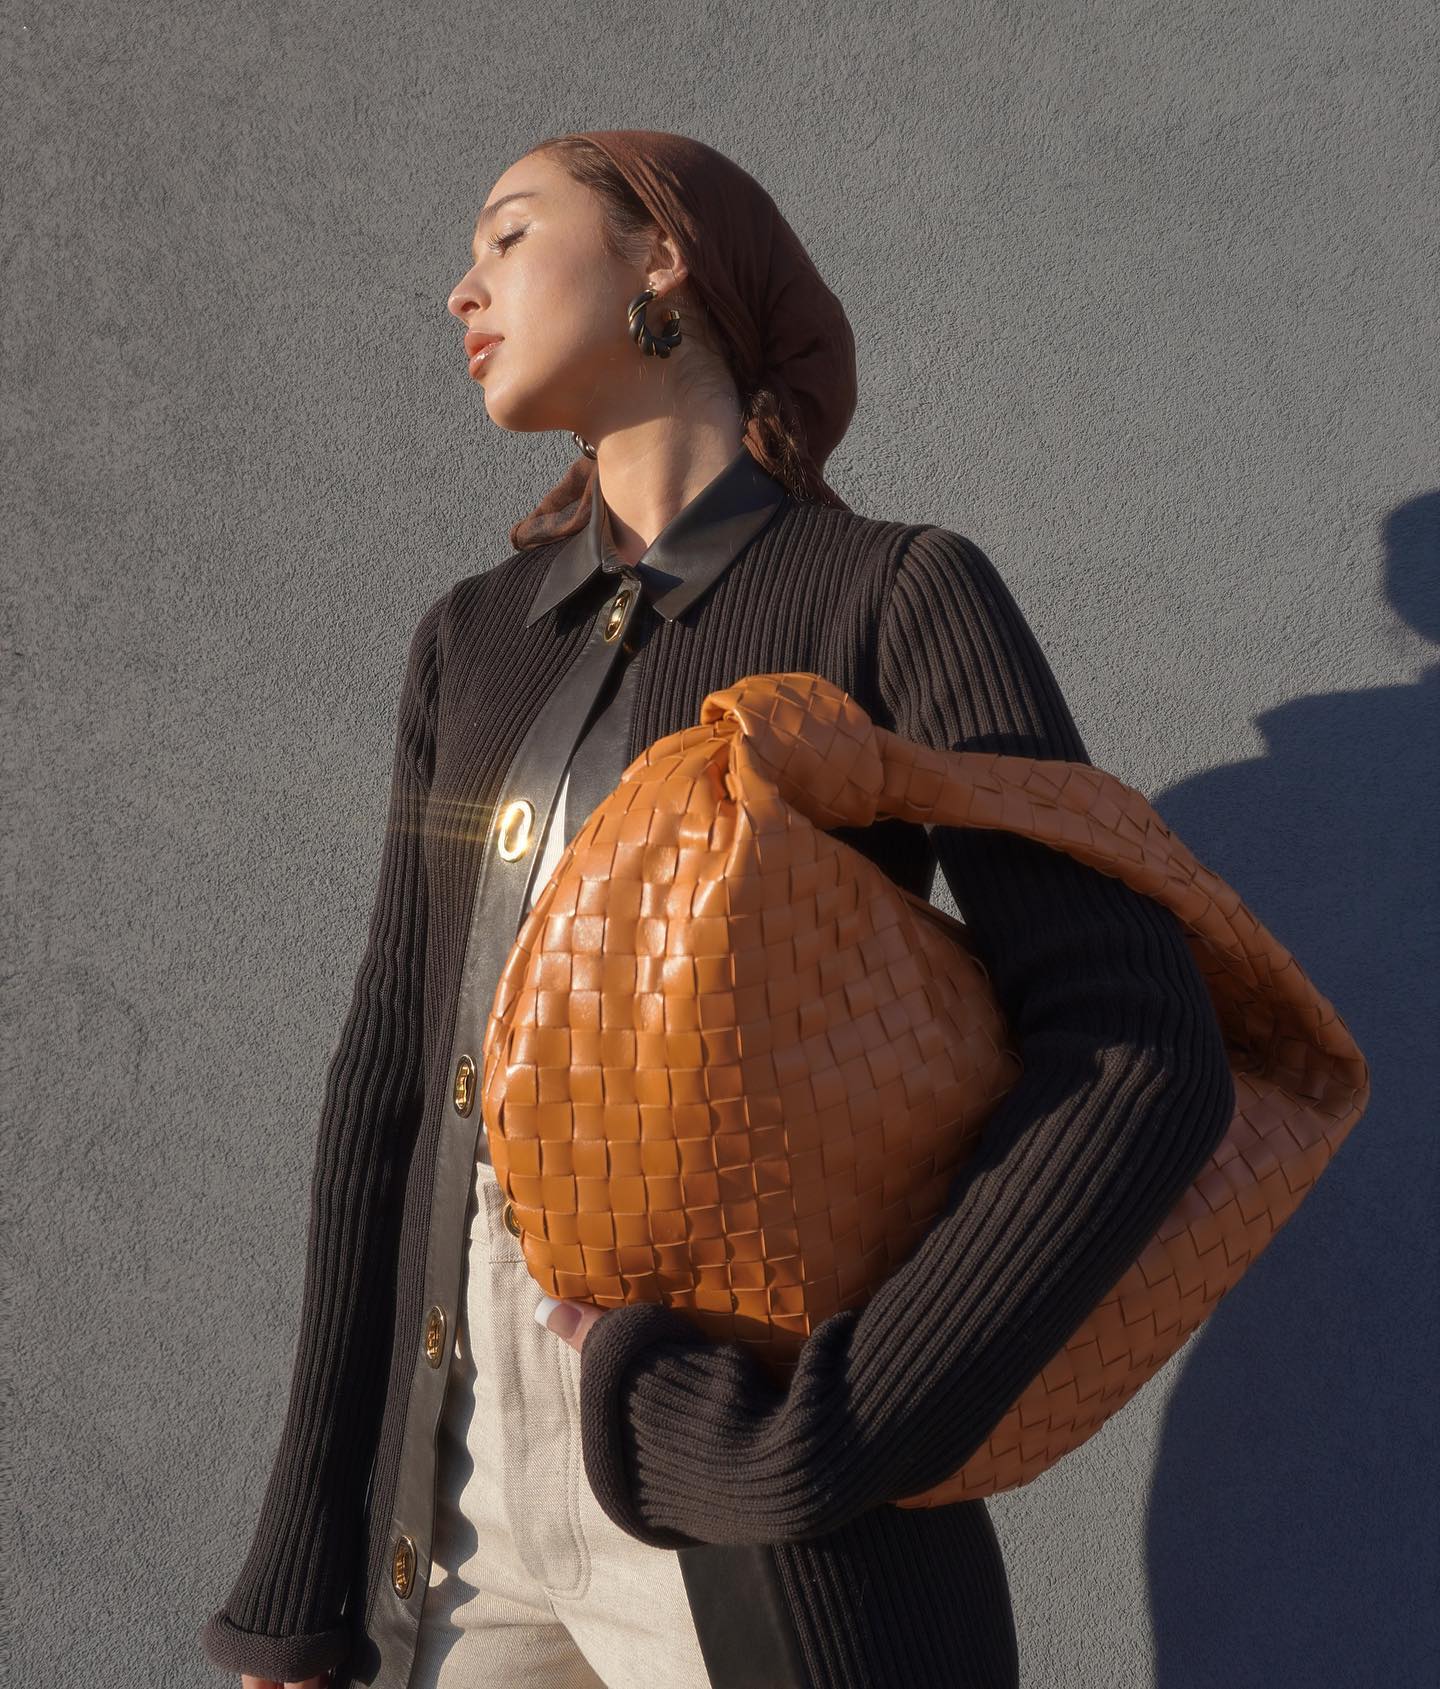 5 Affordable Fall Handbag Trends Fashion People Are Loving